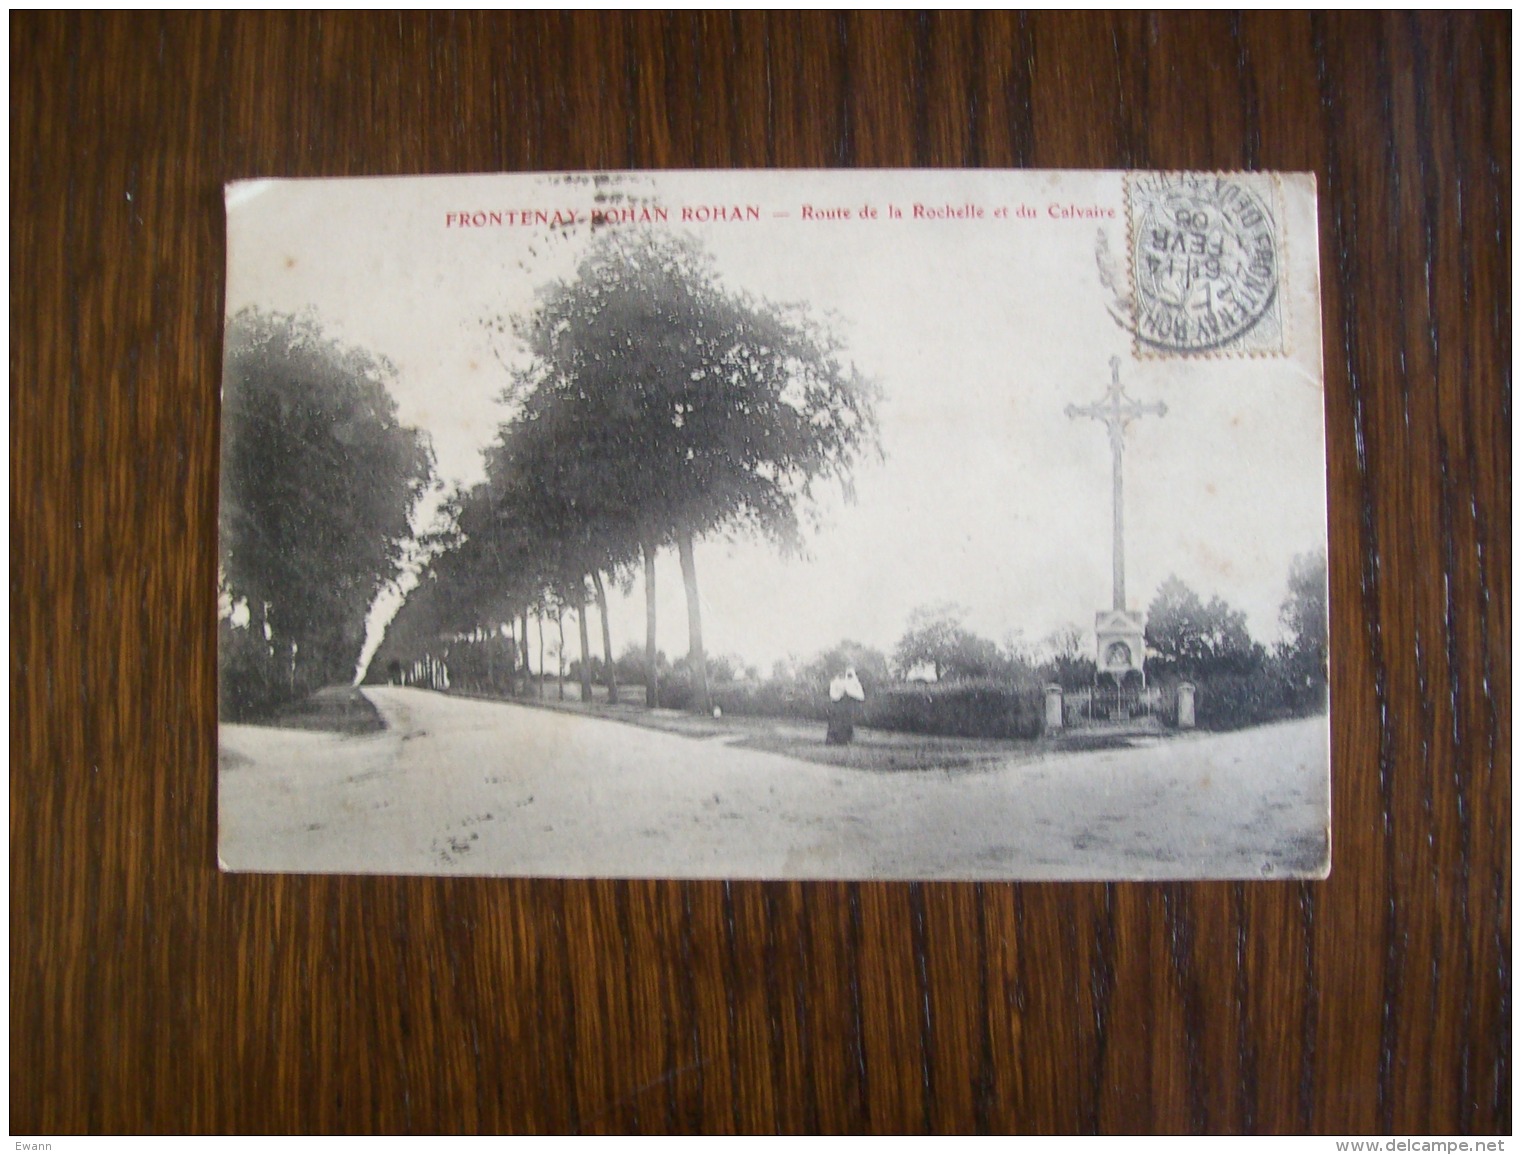 Carte Postale Ancienne De Frontenay-Rohan-Rohan: Route De La Rochelle Et Du Calvaire - Frontenay-Rohan-Rohan